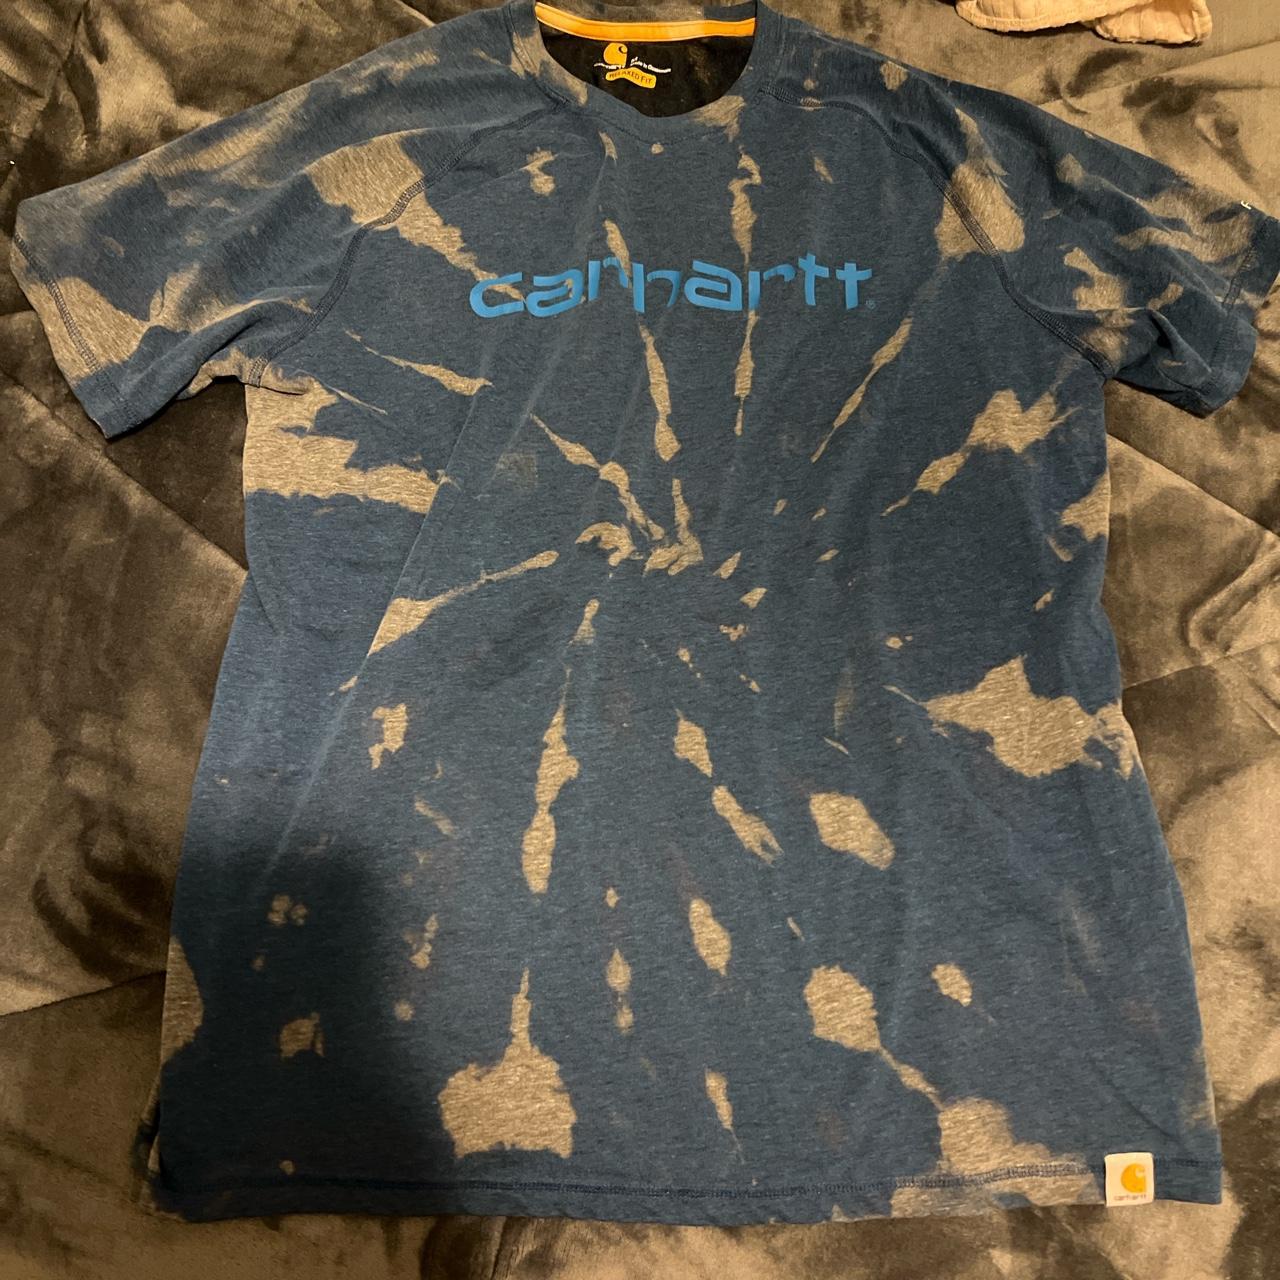 Carhart medium shirt - Depop